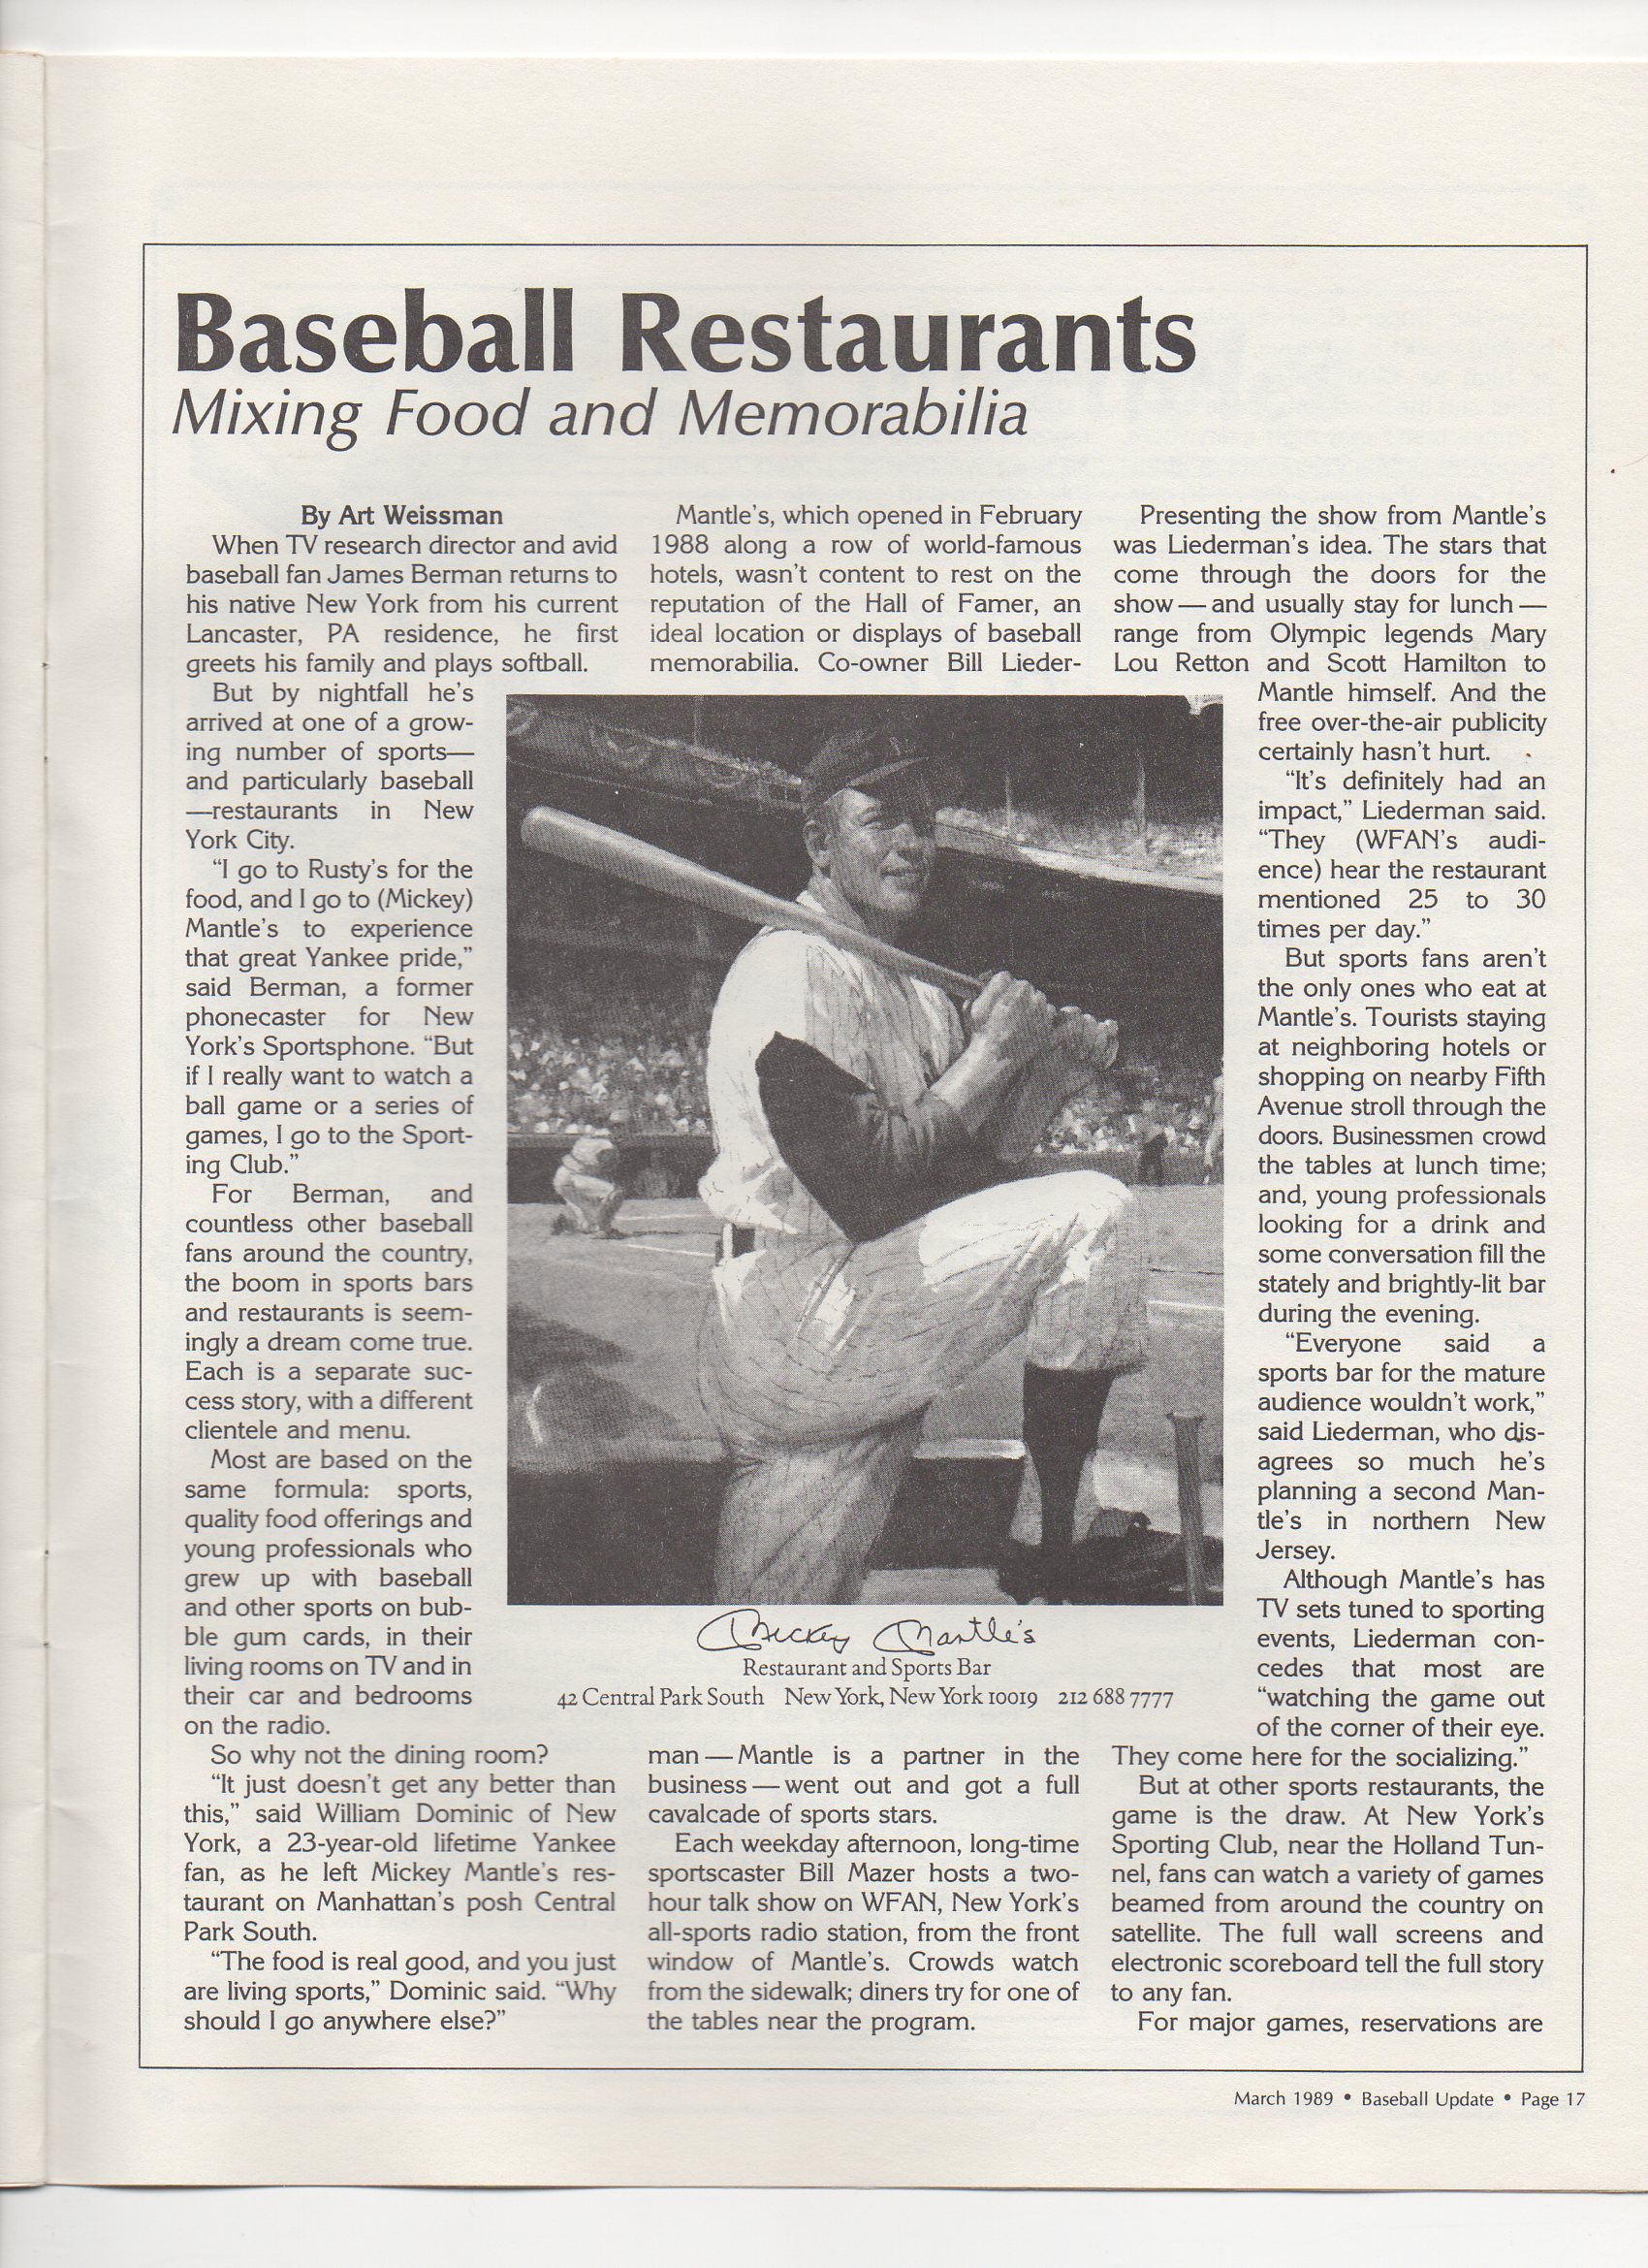 1989 baseball update vol 2, no. 2 march